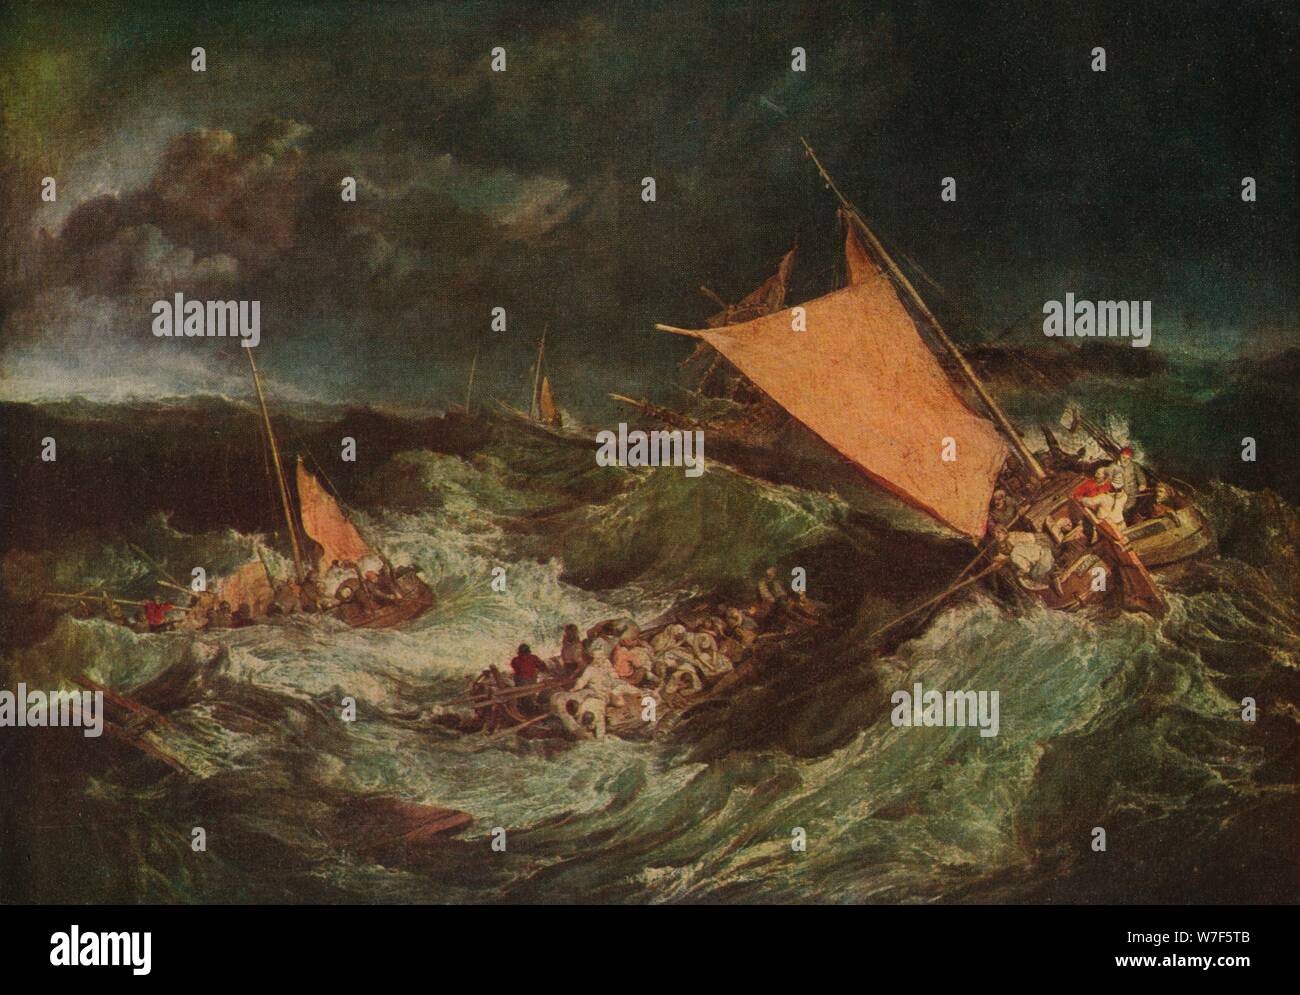 'The Shipwreck', c1805. Artist: JMW Turner. Stock Photo